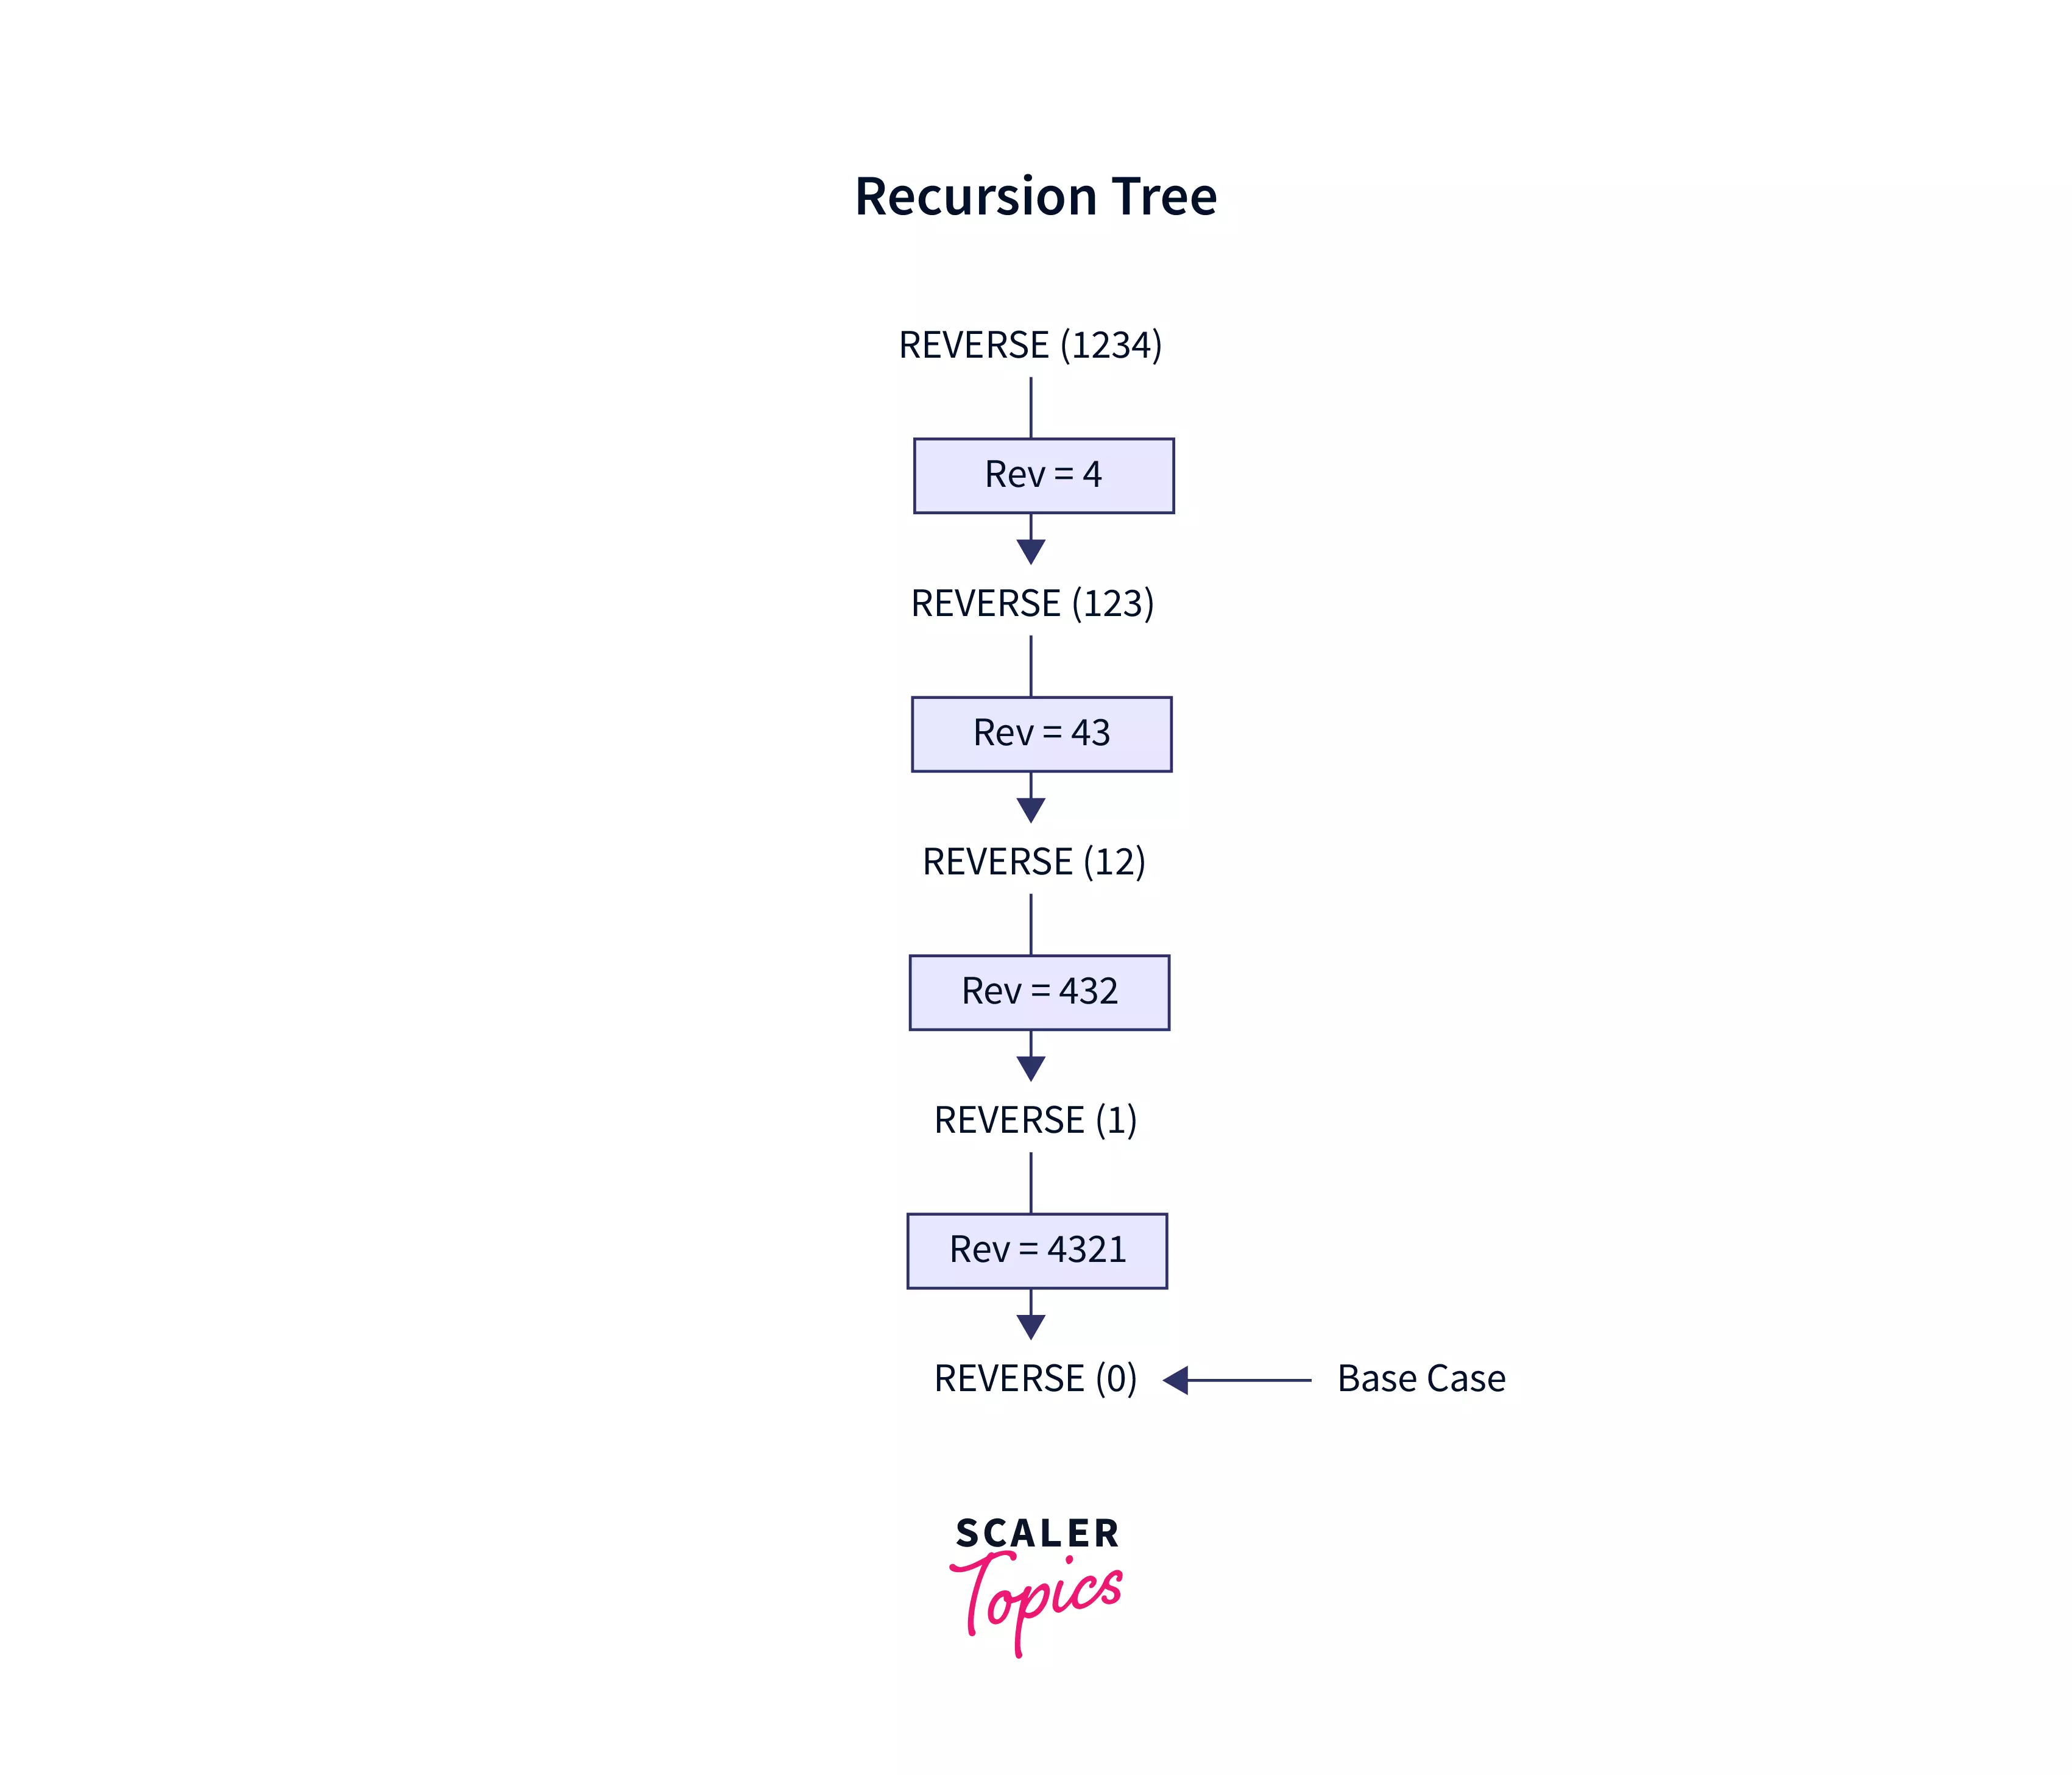 The recursion tree